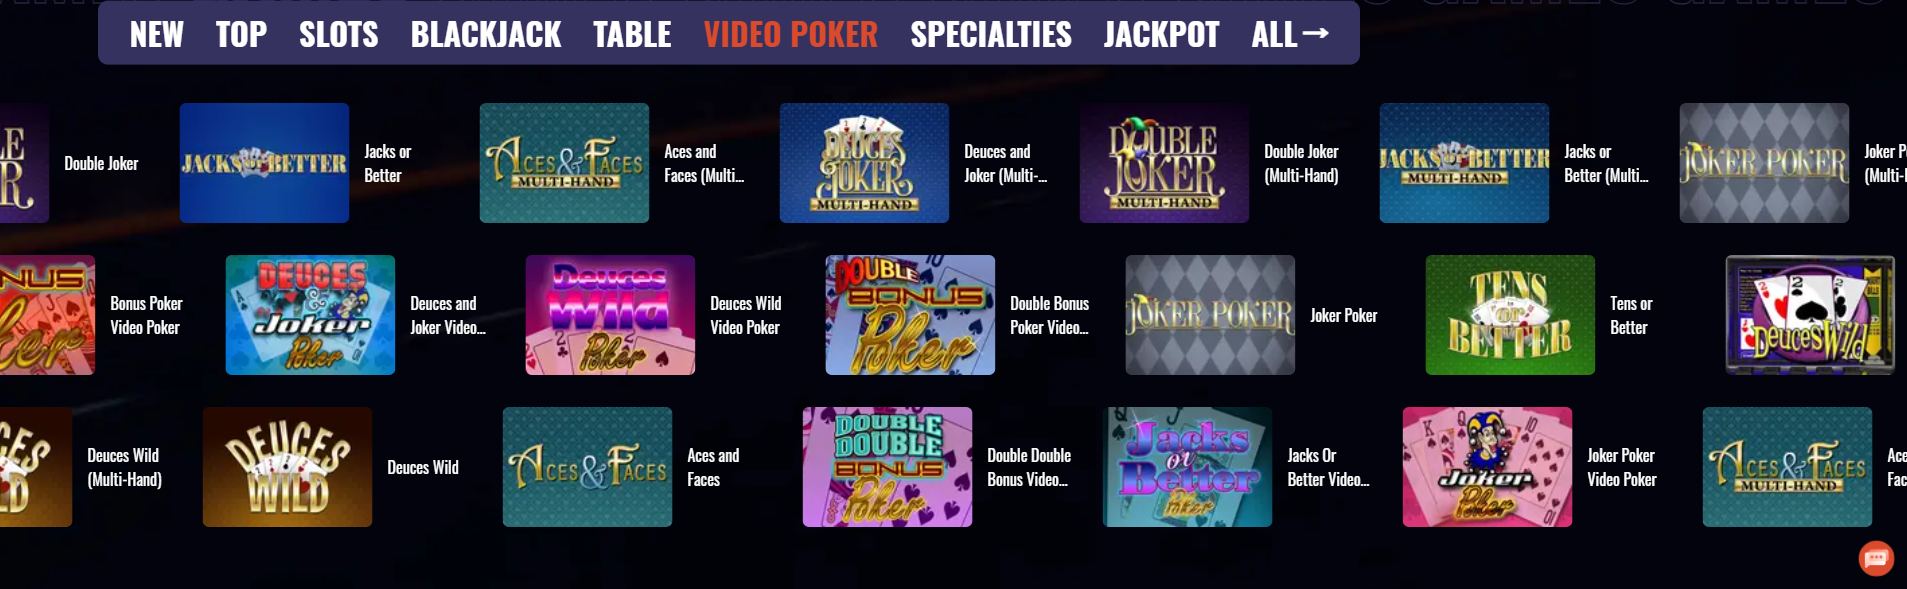 HC Video Poker Games Gallery